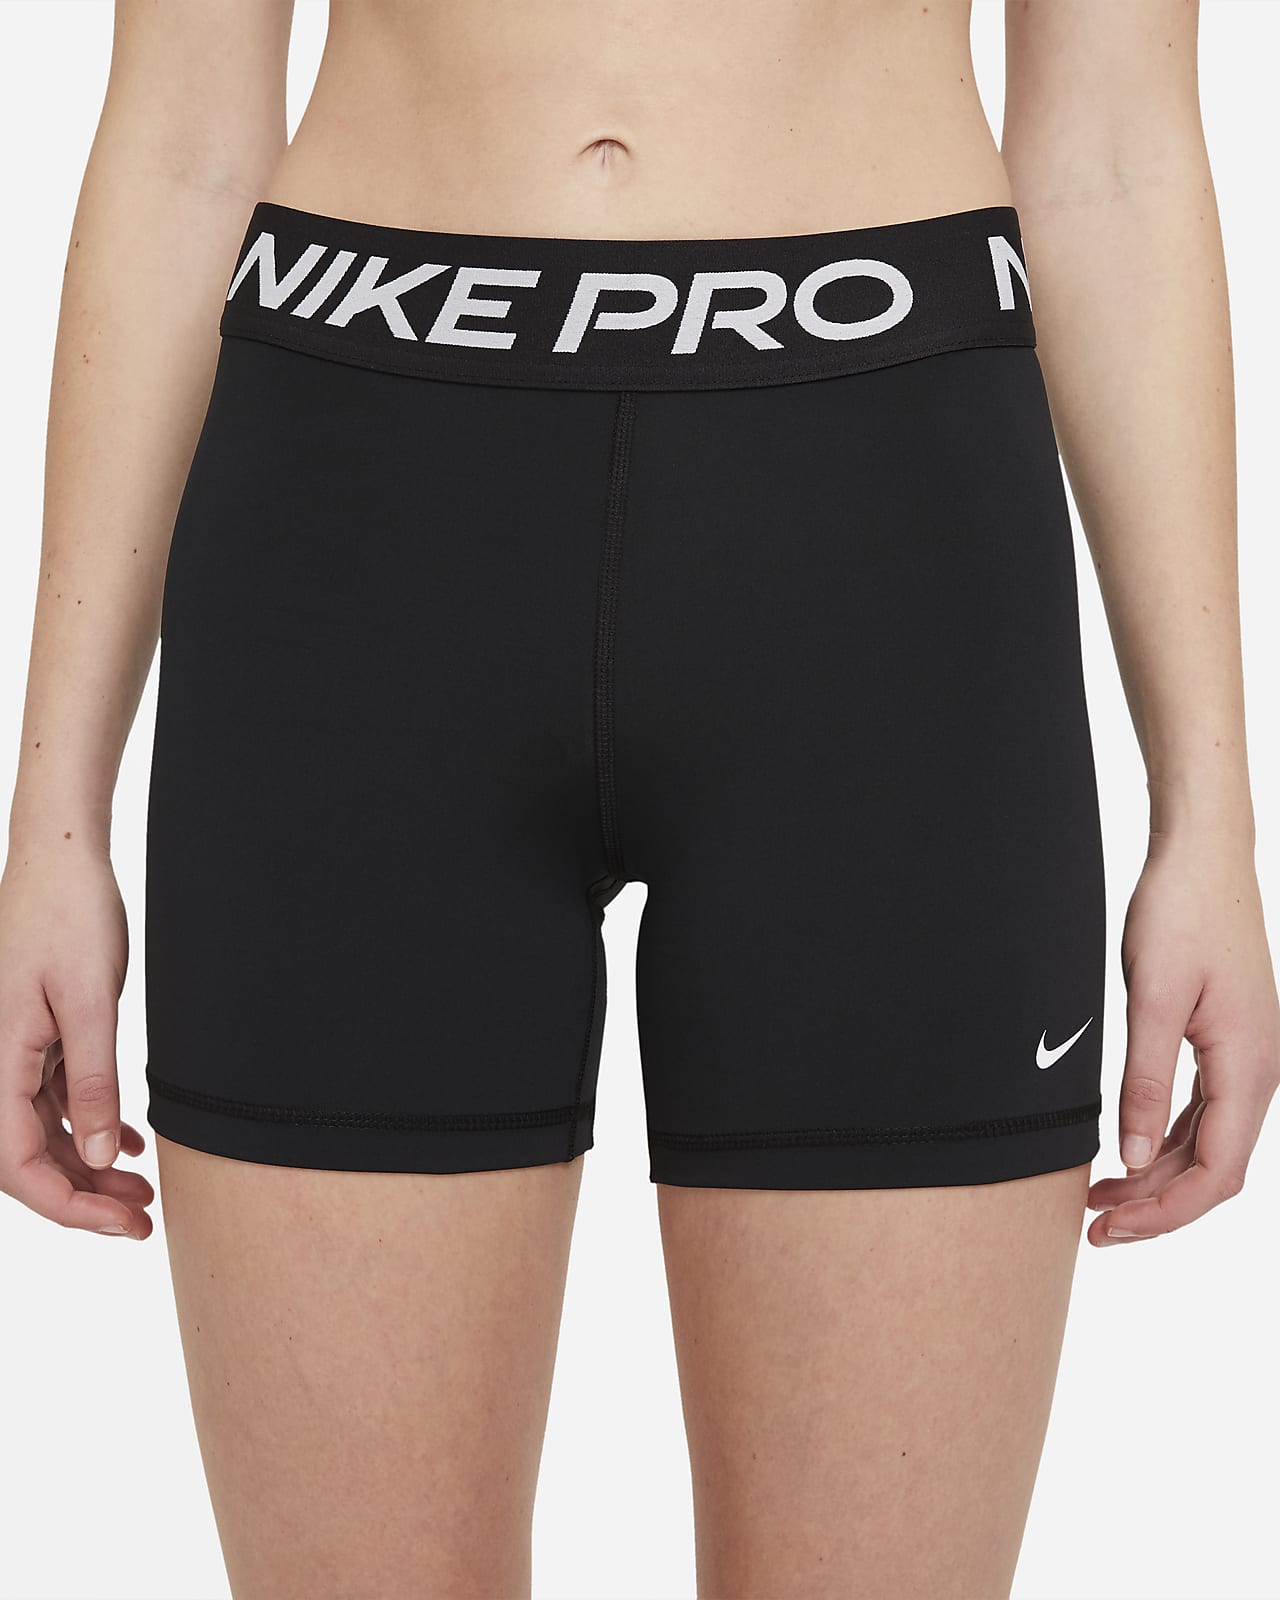 nike 5 inch shorts womens